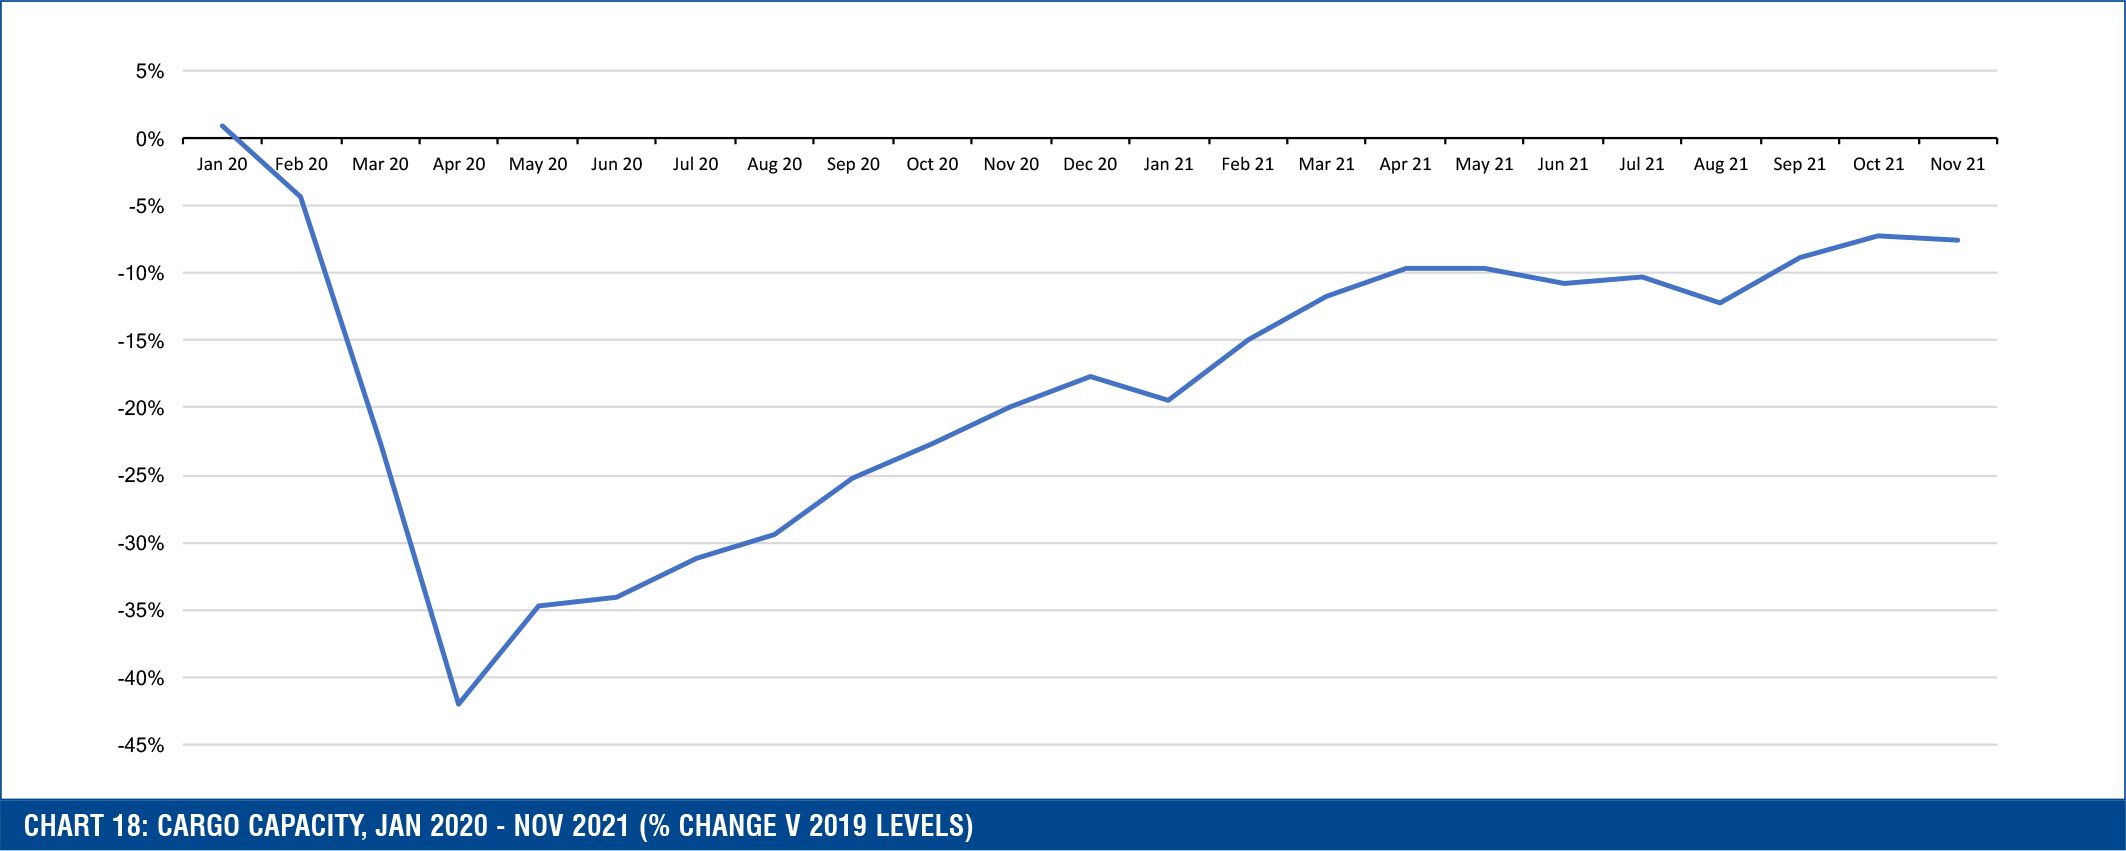 Chart 18: Cargo capacity Jan 2020 - Nov 2021 (% change against 2019 levels)